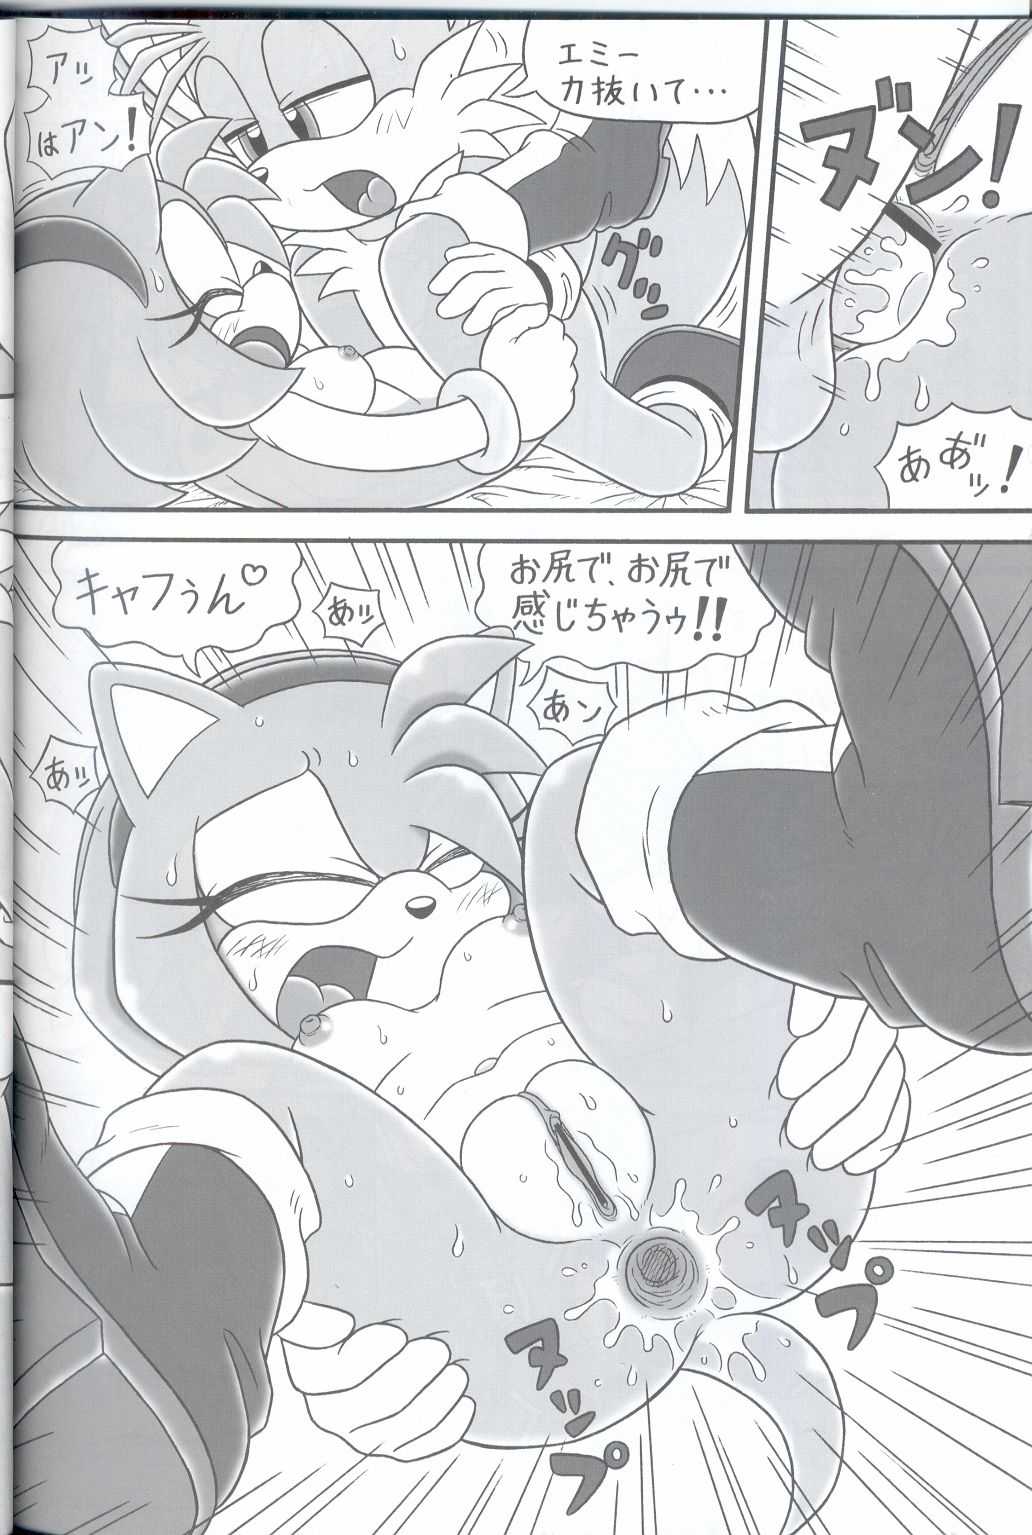 [Furry Bomb Factory] Furry BOMB 3 {Sonic} 